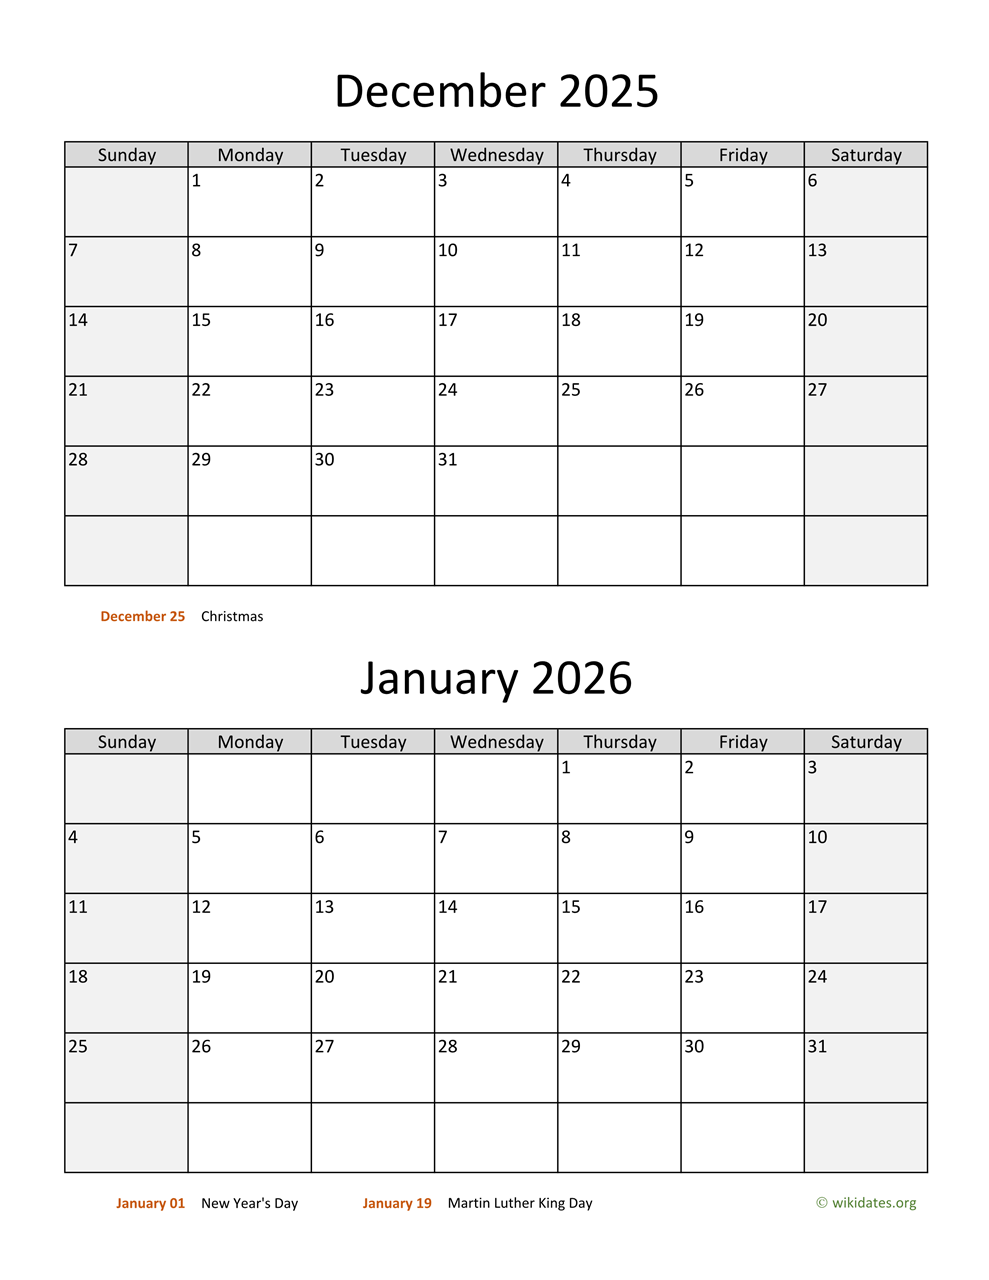 december-2025-and-january-2026-calendar-wikidates